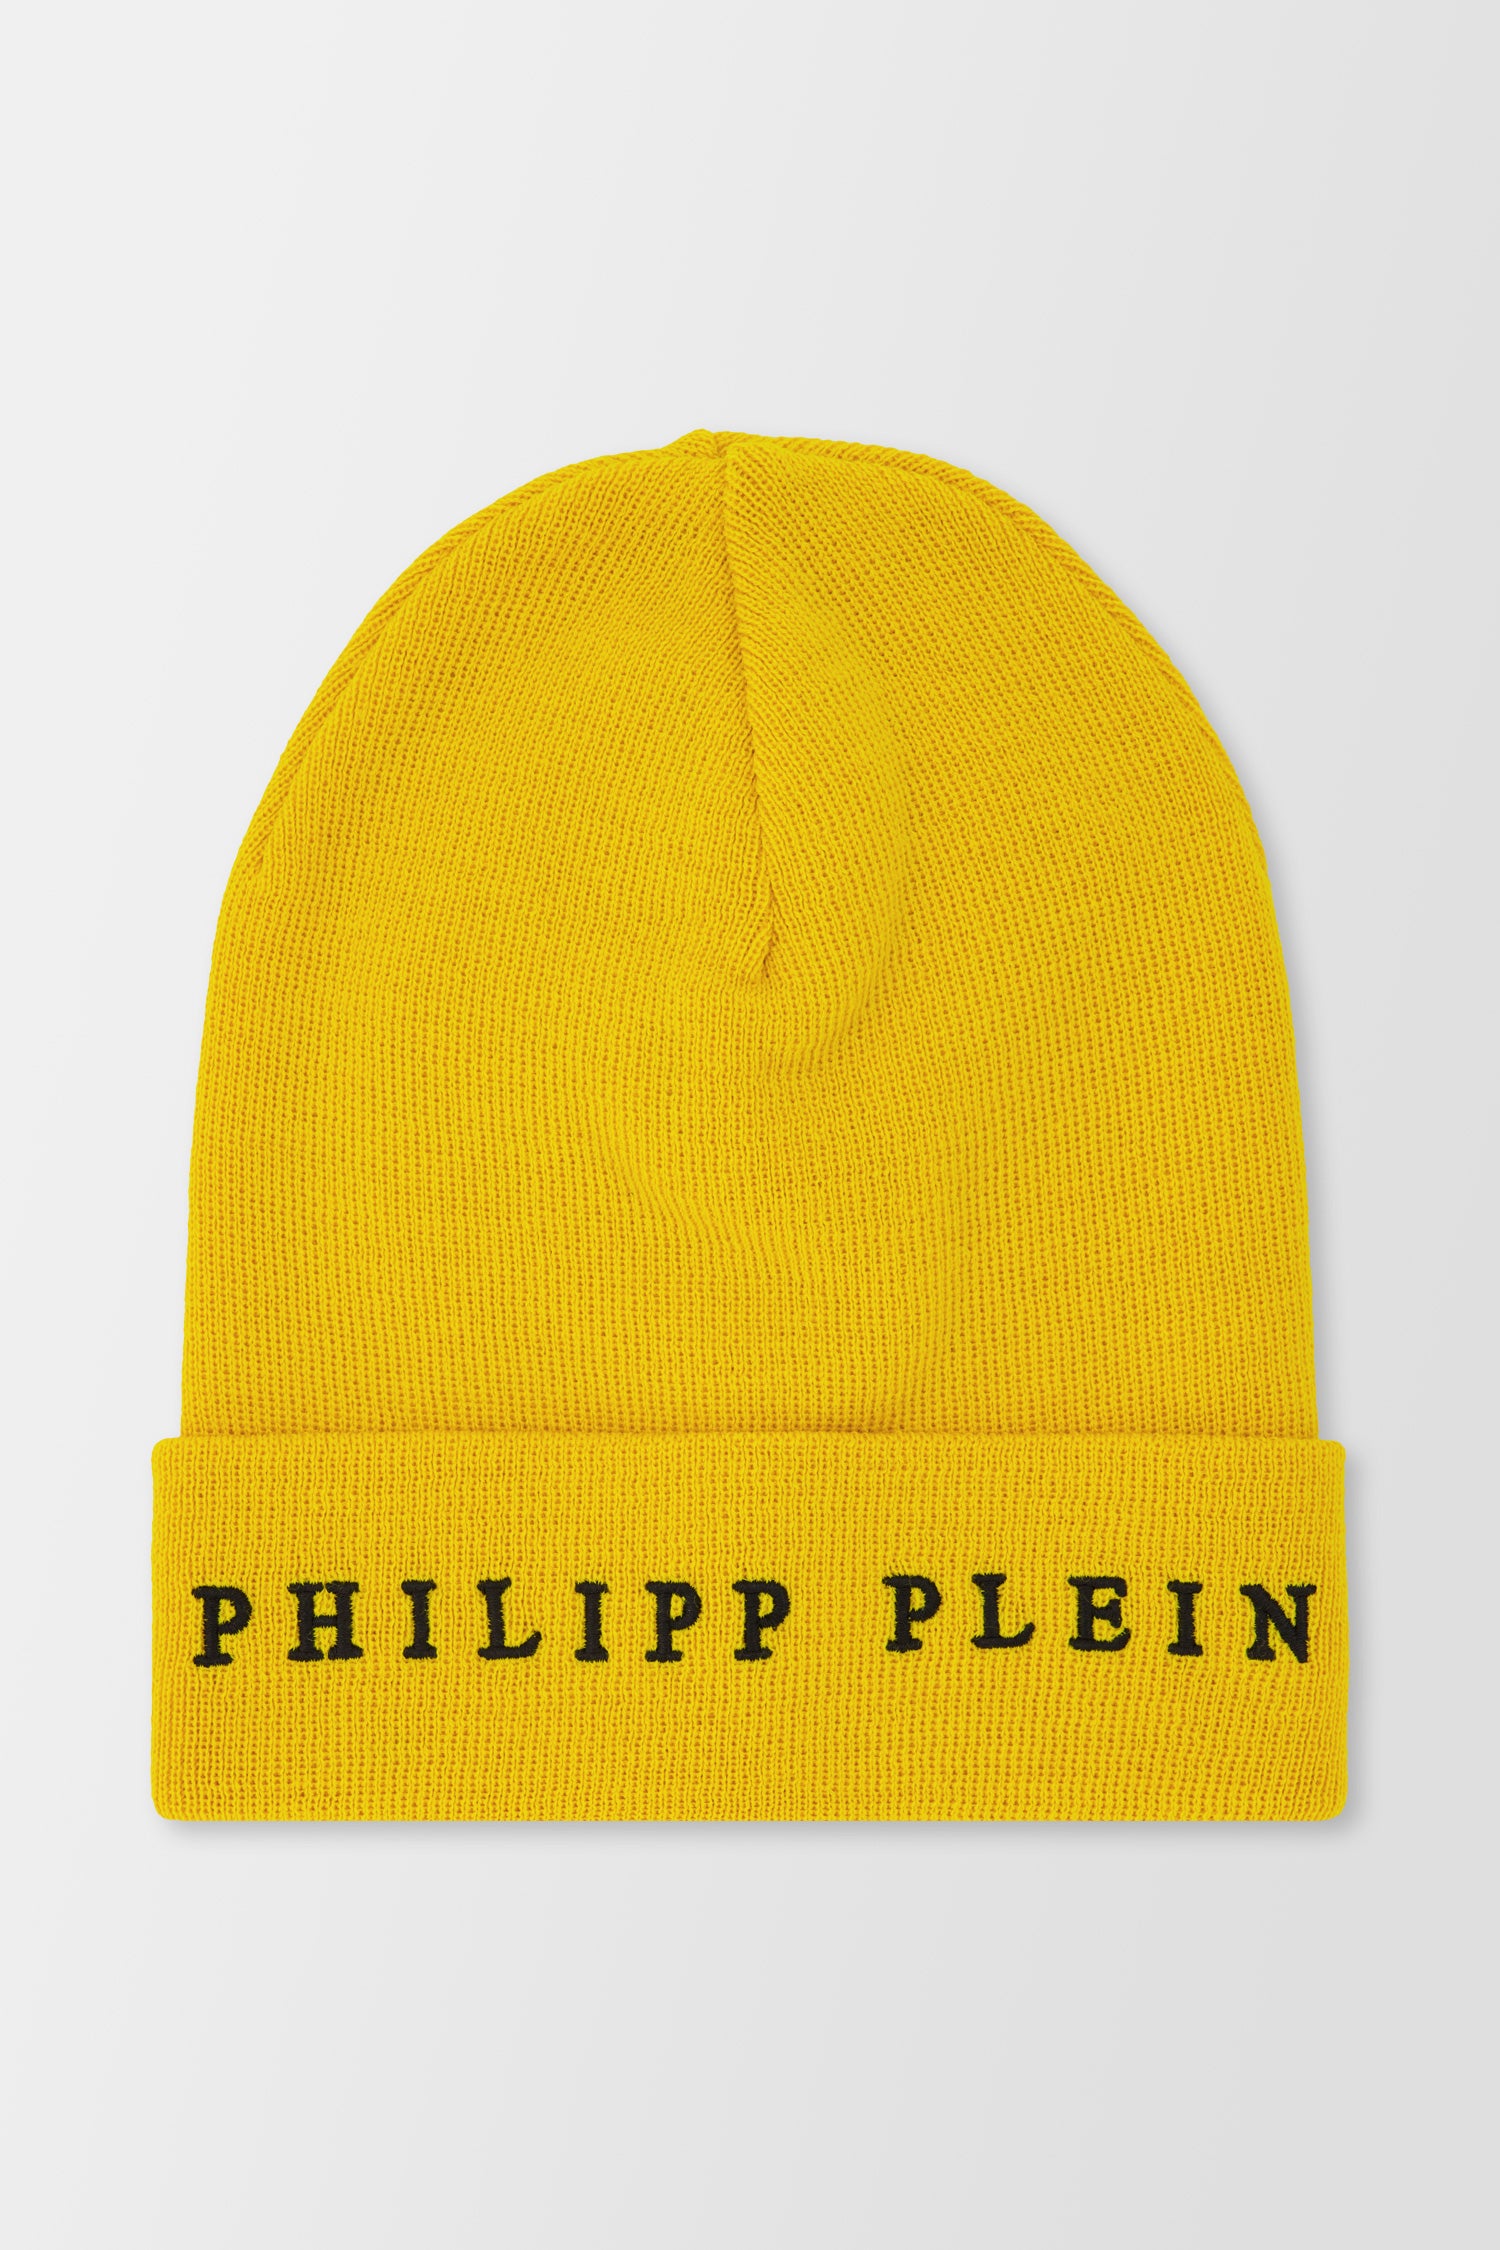 Philipp Plein Yellow Hat